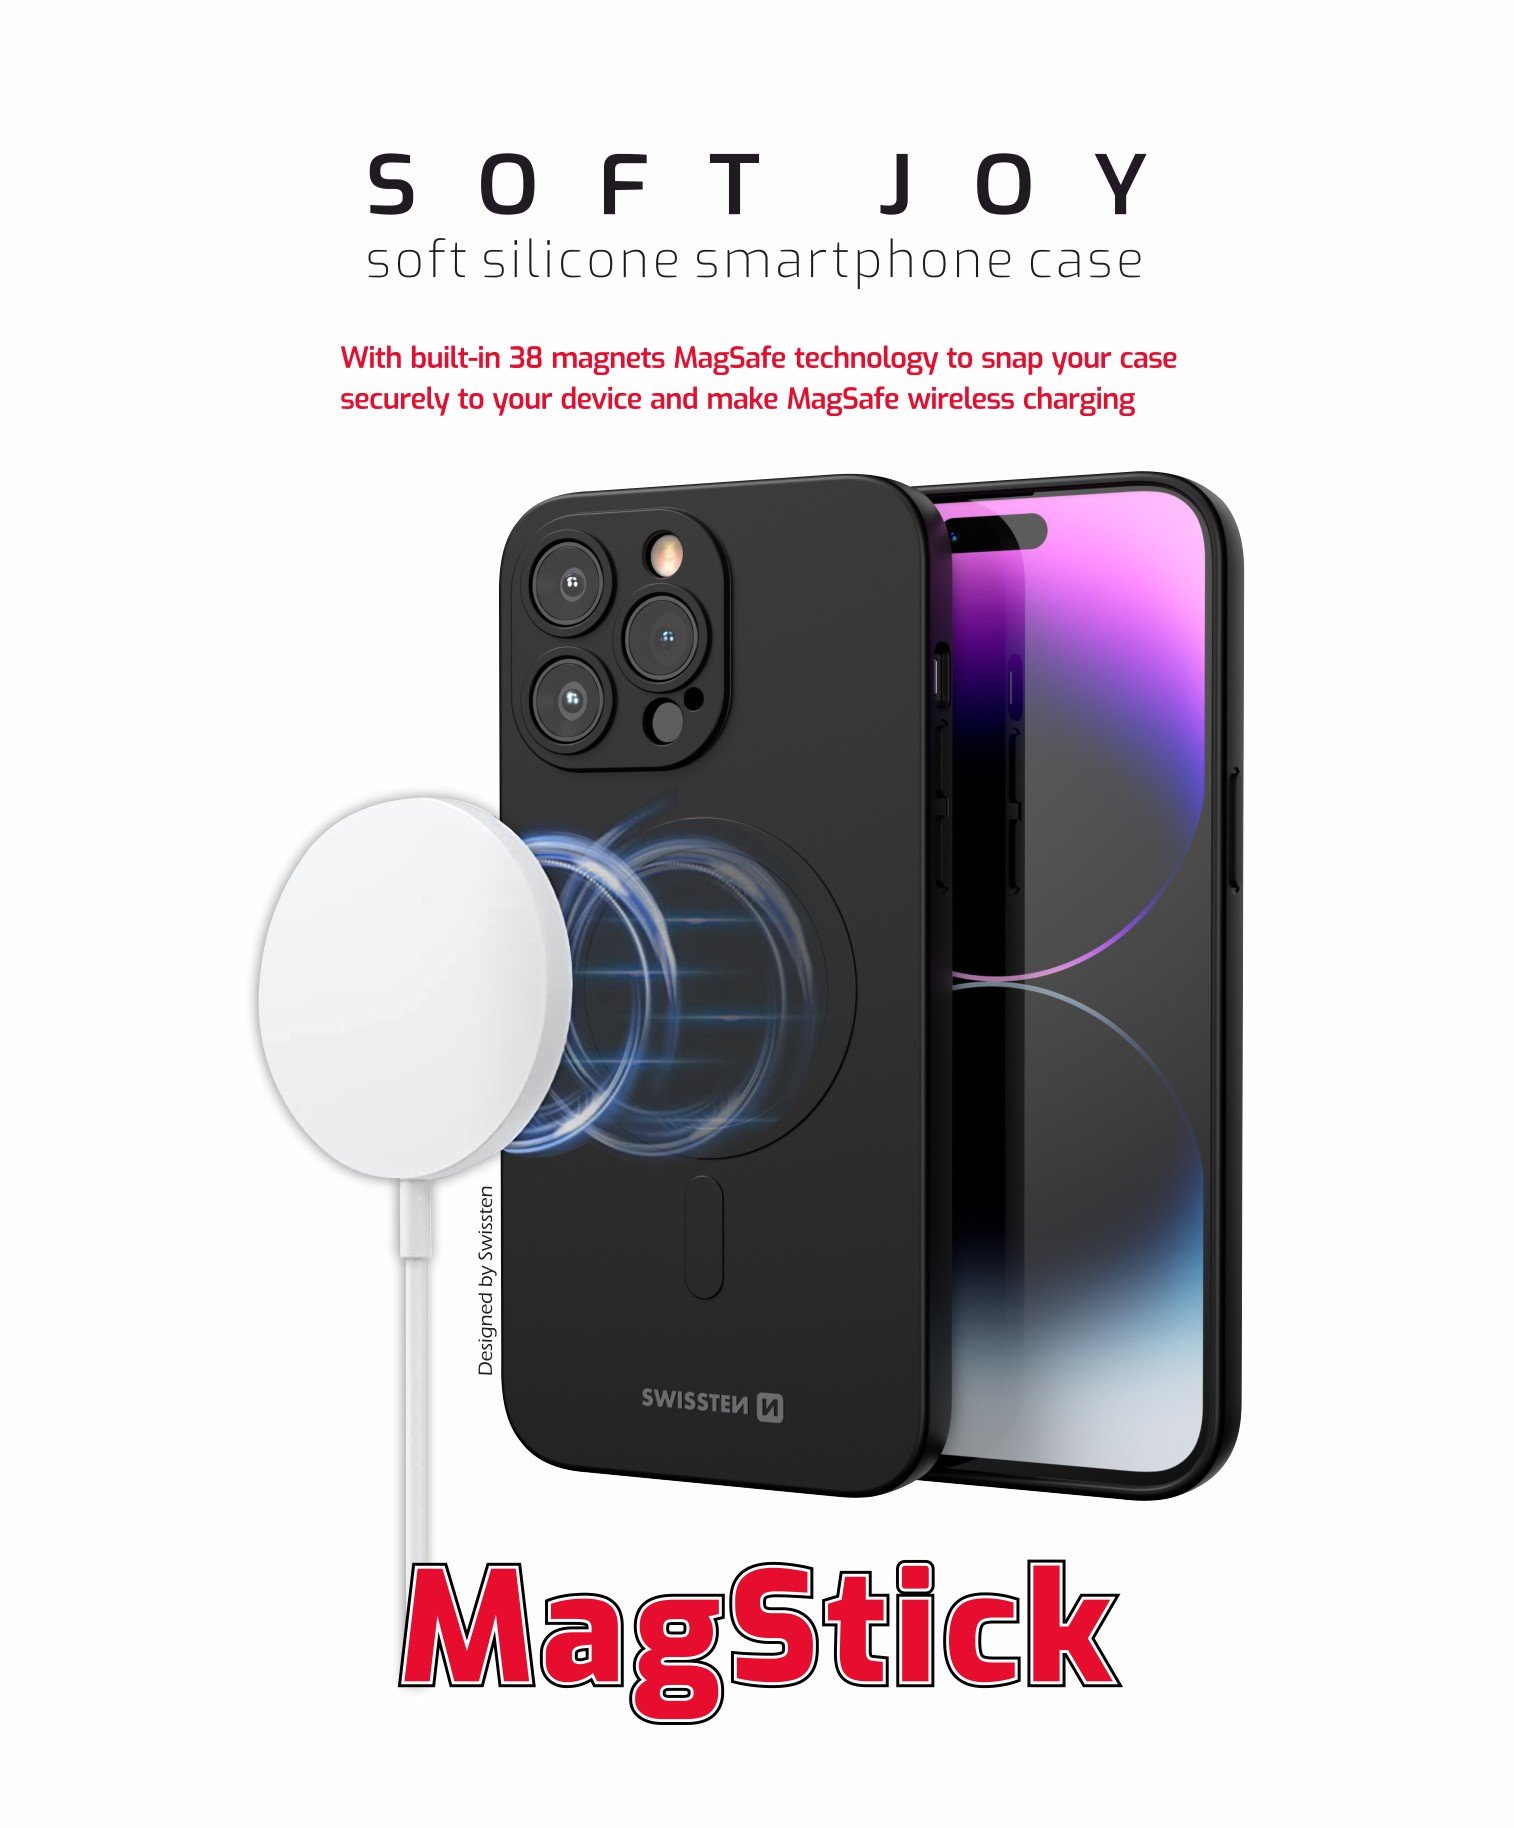 Swissten iPhone 12 Pro Soft Joy Magstick Case - 35500106 - For Magsafe Charging - Black